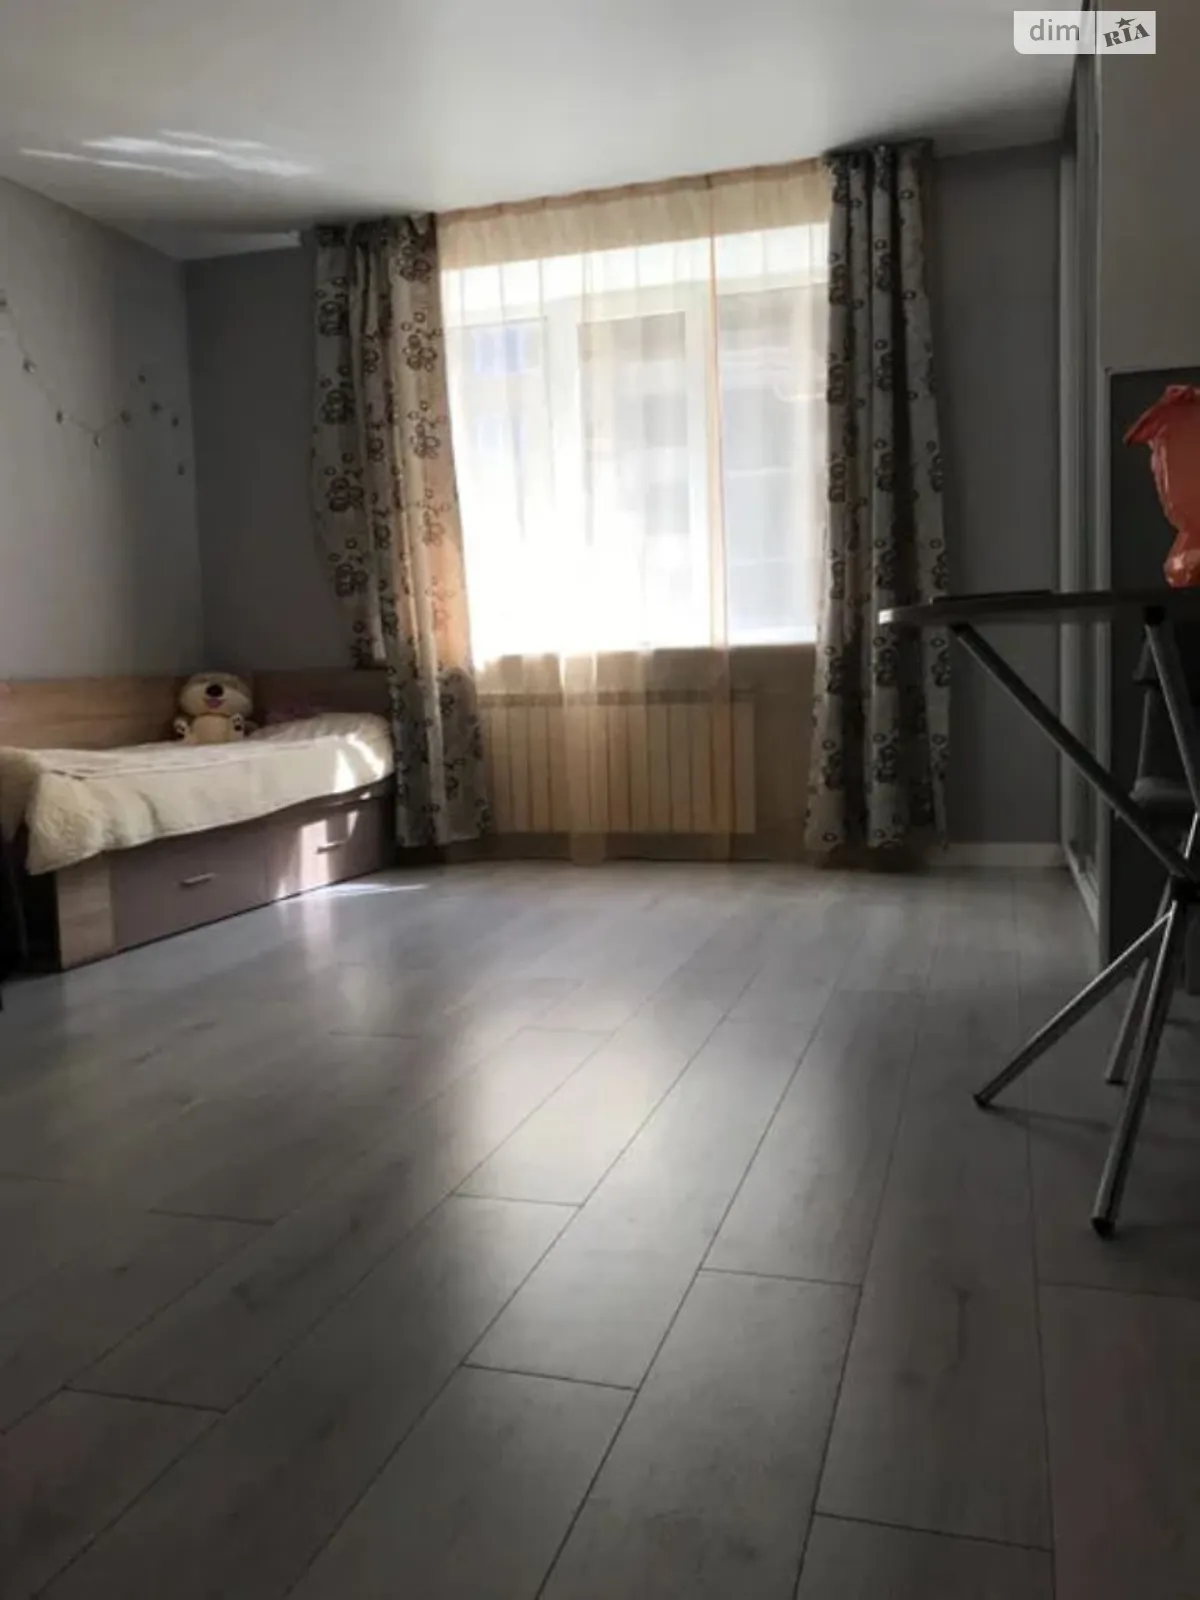 Продается комната 26 кв. м в Одессе, цена: 11000 $ - фото 1